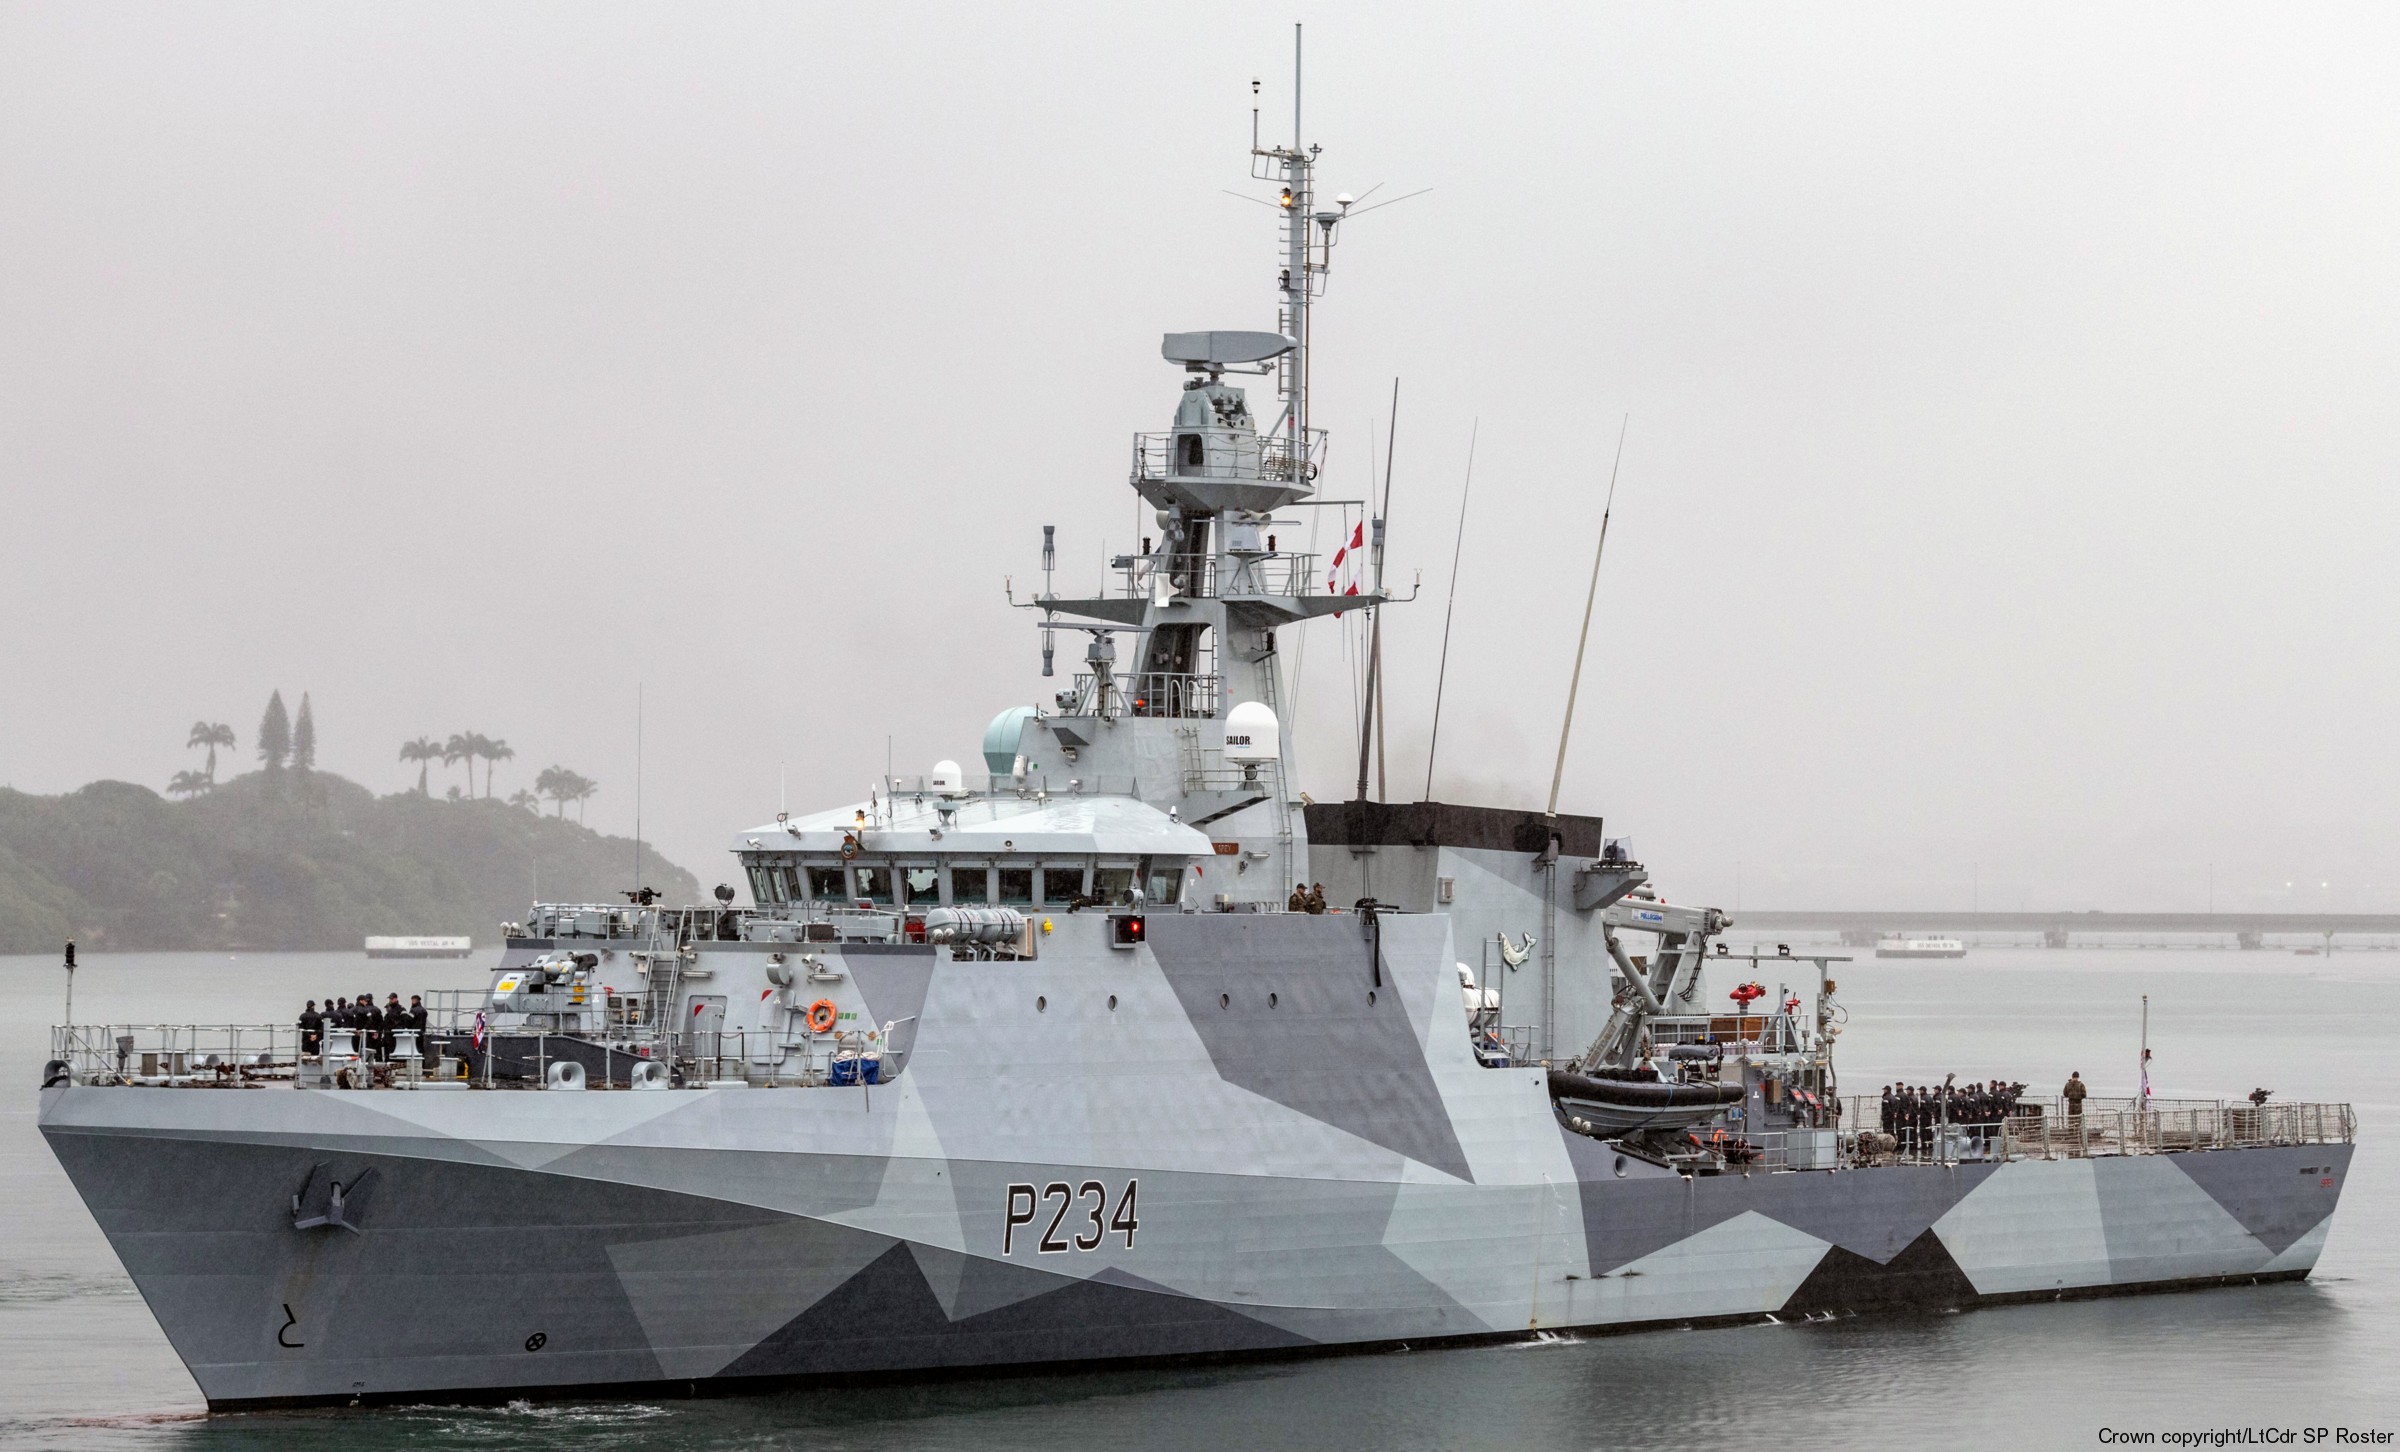 p234 hms spey river class offshore patrol vessel opv royal navy 25